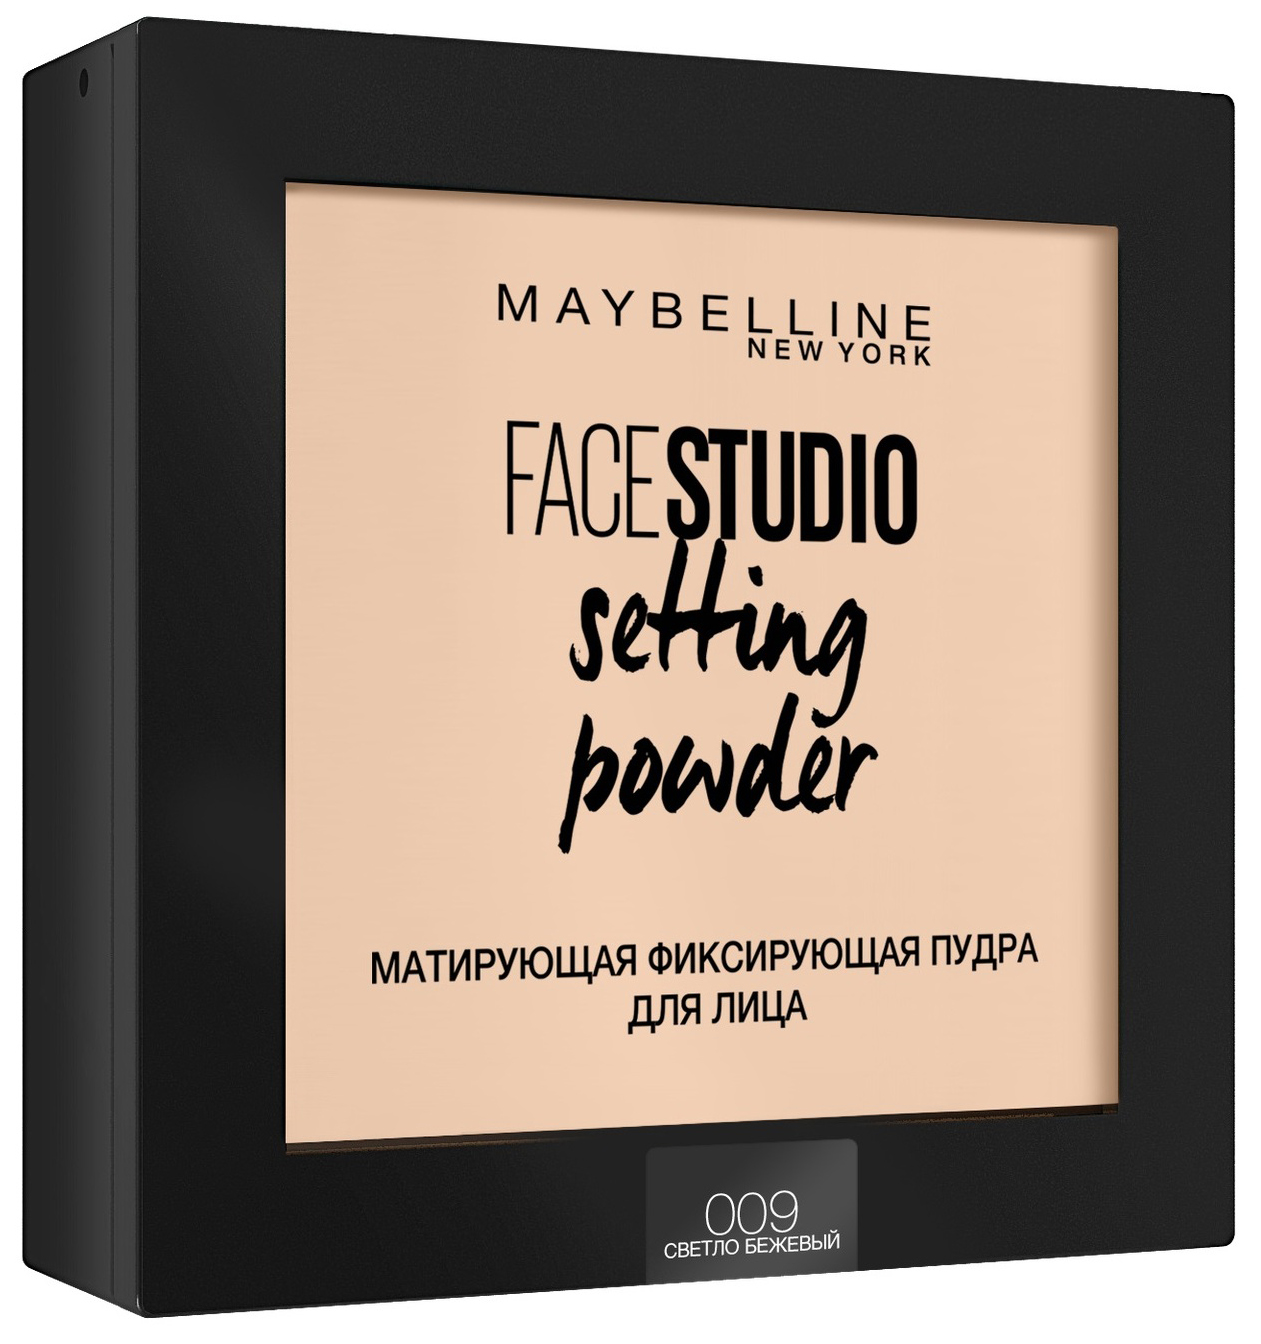 Пудра Maybelline Face Studio Setting Powder 009 Светло-бежевый 9 г пудра mac cosmetics studio fix powder plus foundation тон nw20 15 г